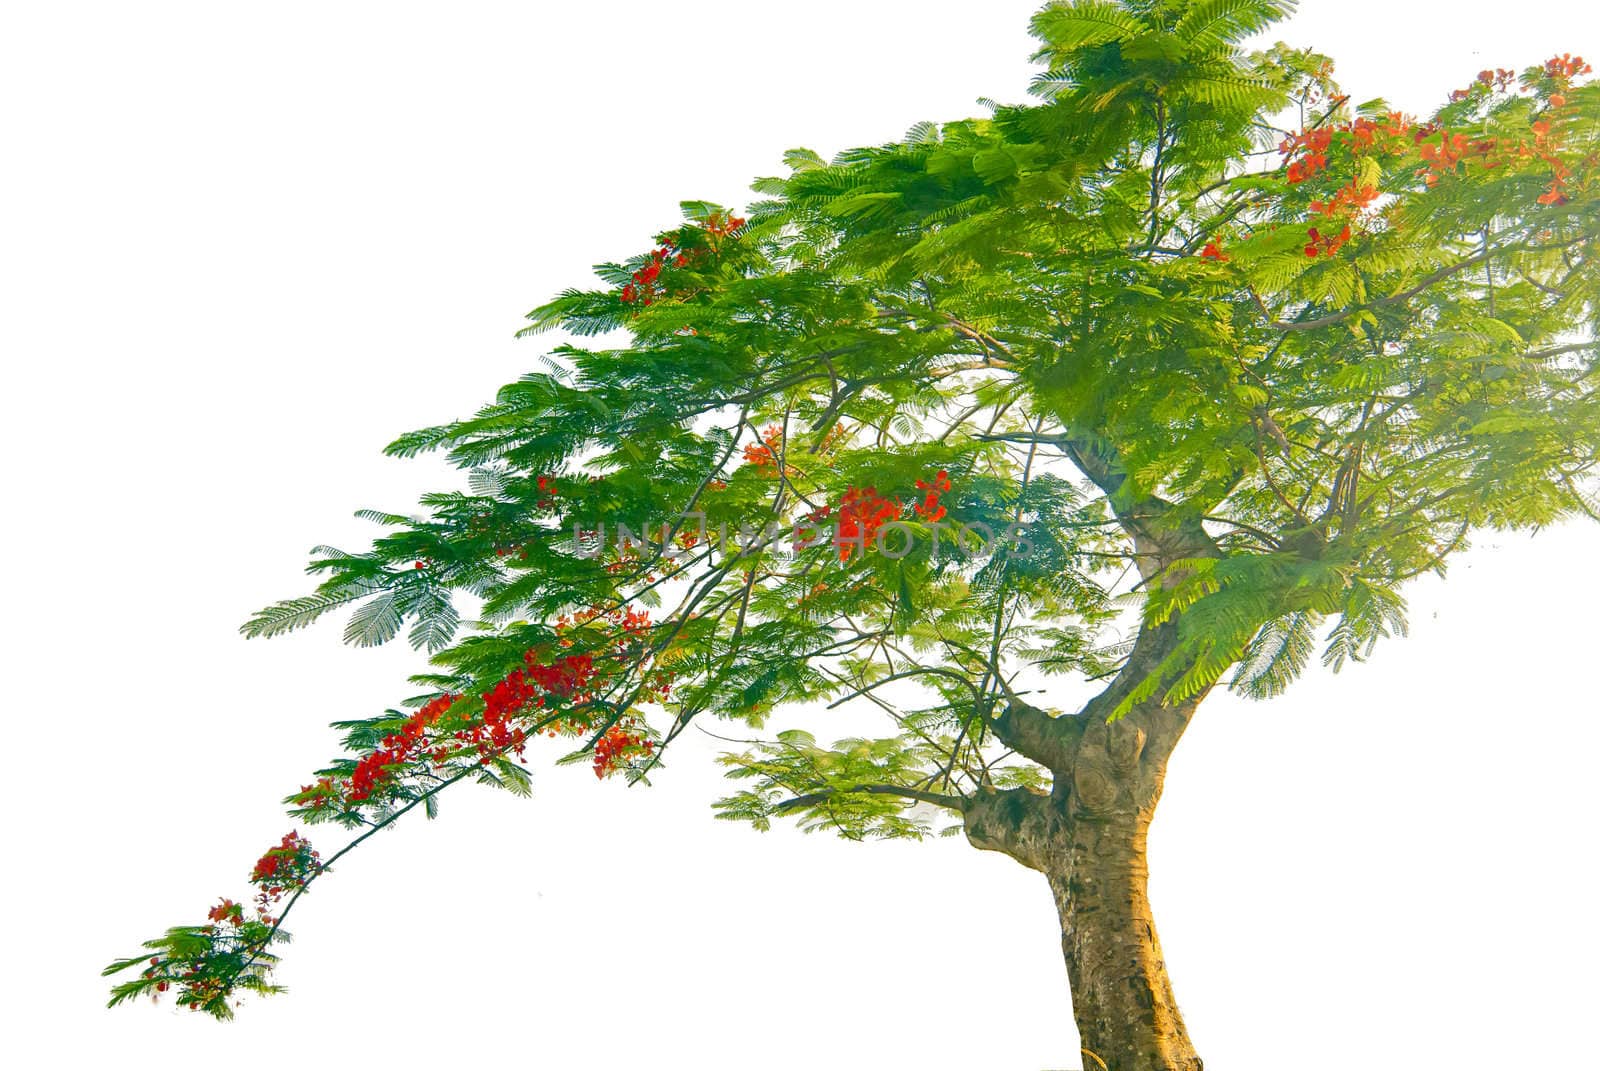 a colorful ornamental tree native to Madagascar